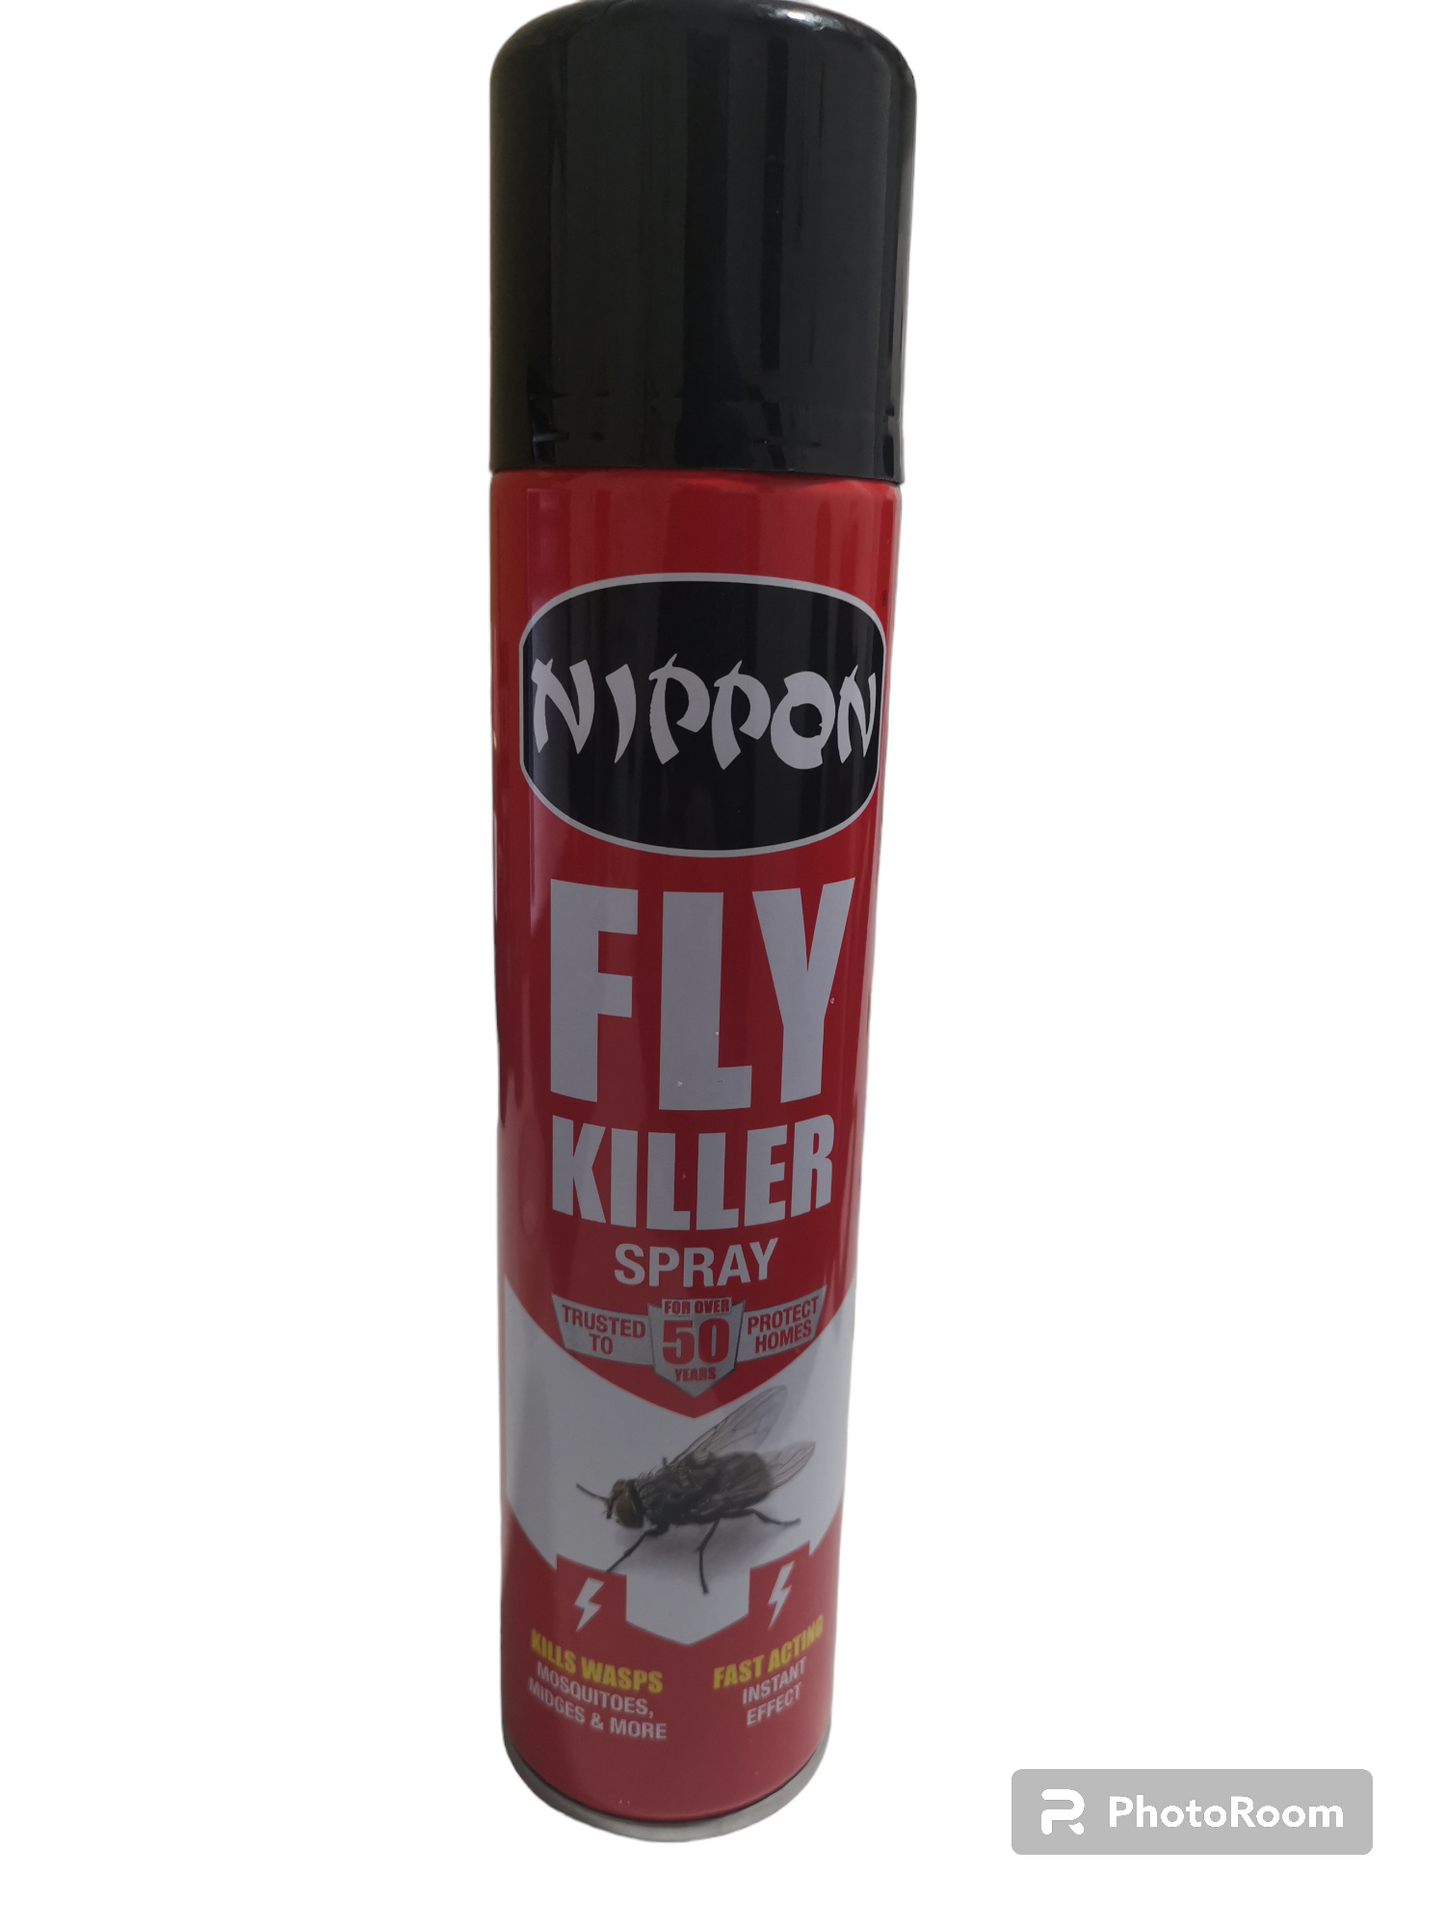 Nippon Fly Killer.